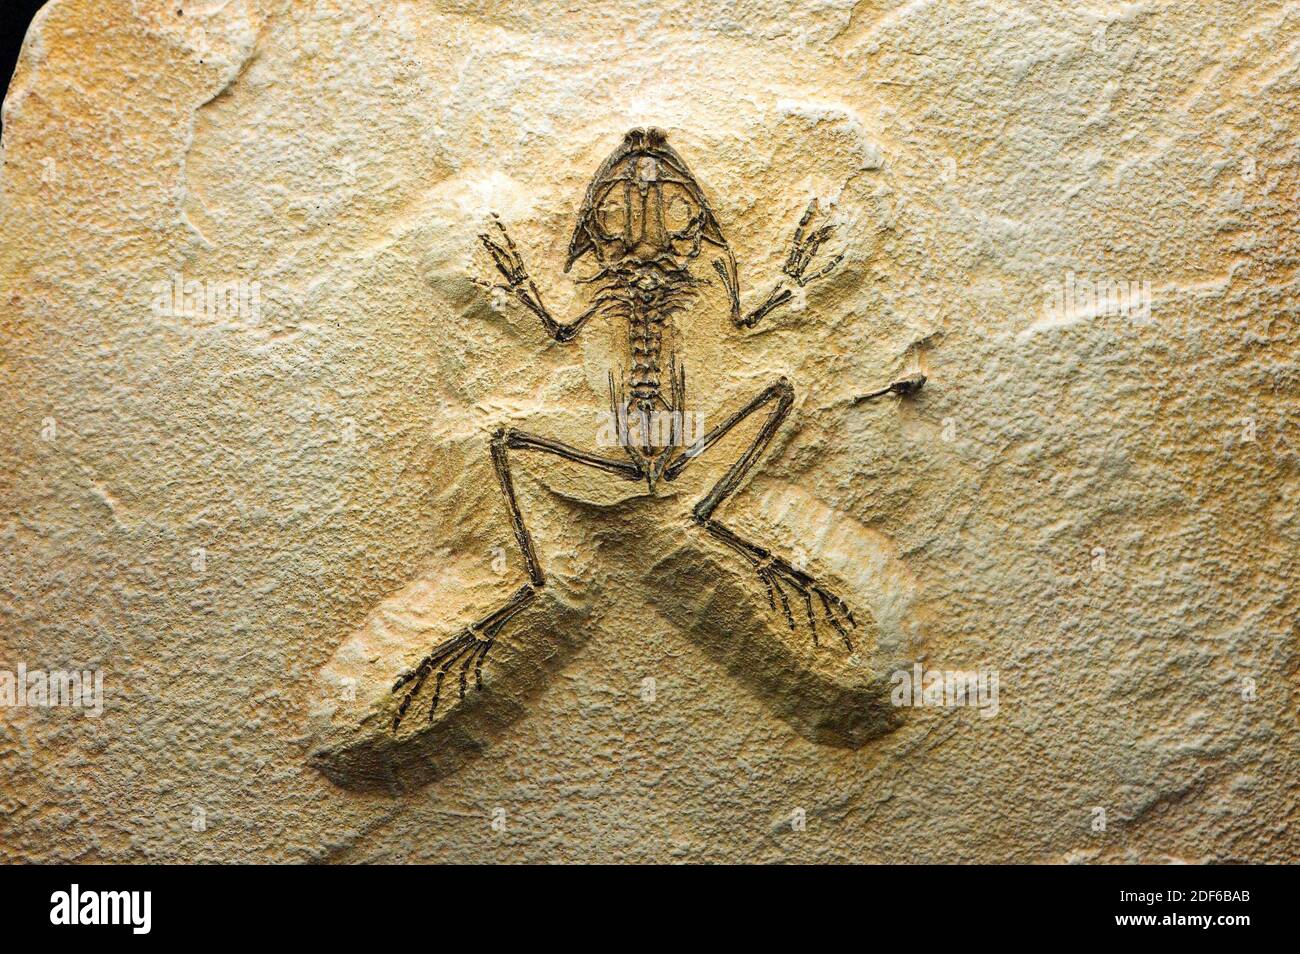 Rana fósil (Eopelobates sp.) Del Eoceno. Esta muestra proviene de Francia. Foto de stock